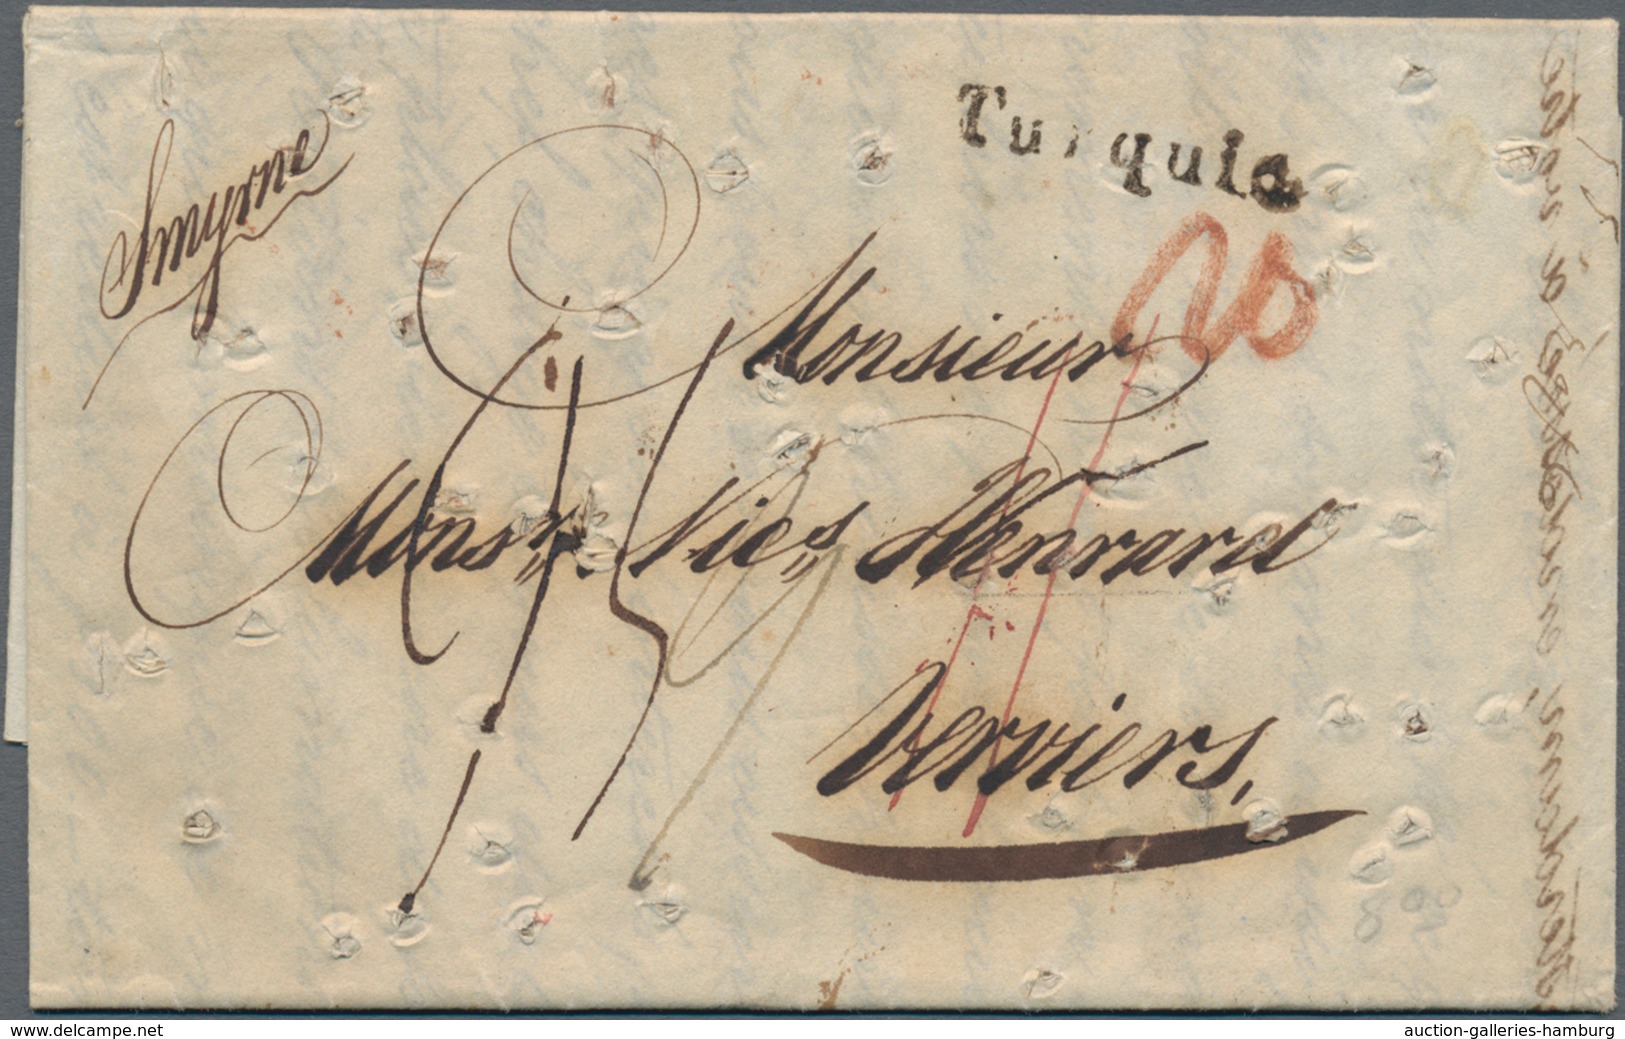 Türkei - Vorphilatelie: 1830, Folded Letter From Smyrna With L1 "Turquia" To Verviers With Red Handw - ...-1858 Prefilatelia